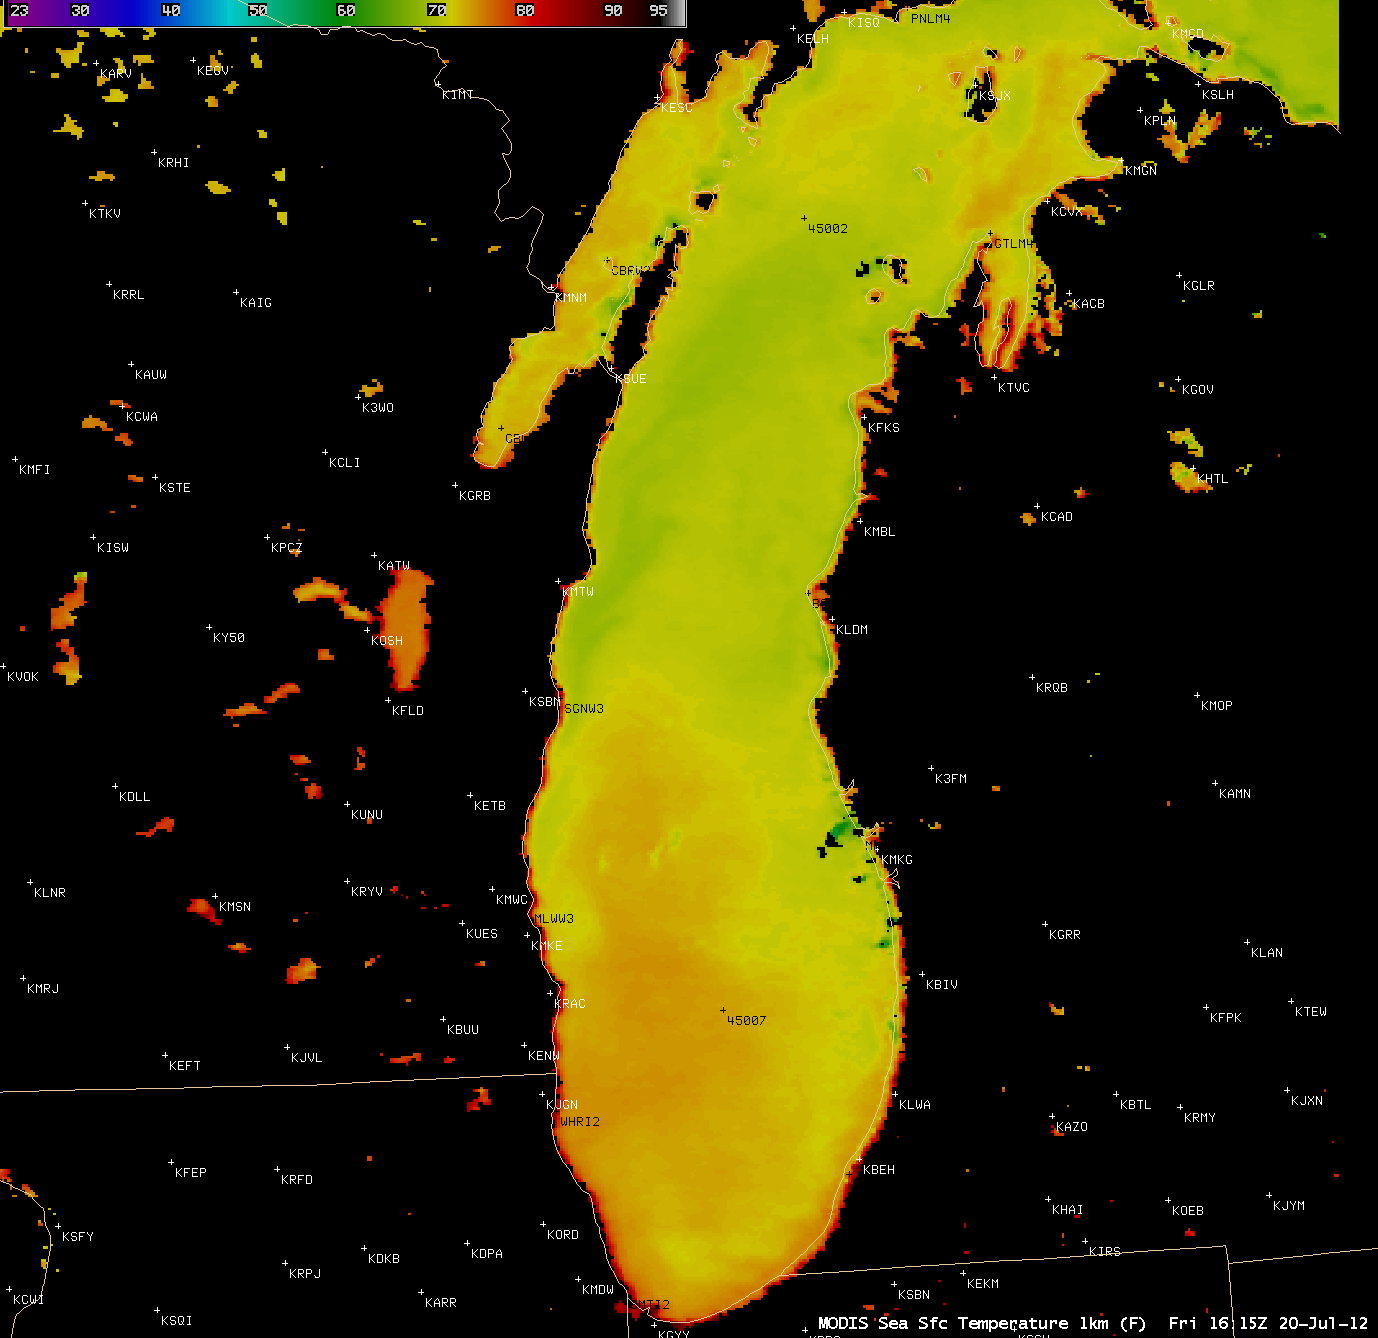 MODIS Sea Surface Temperature product